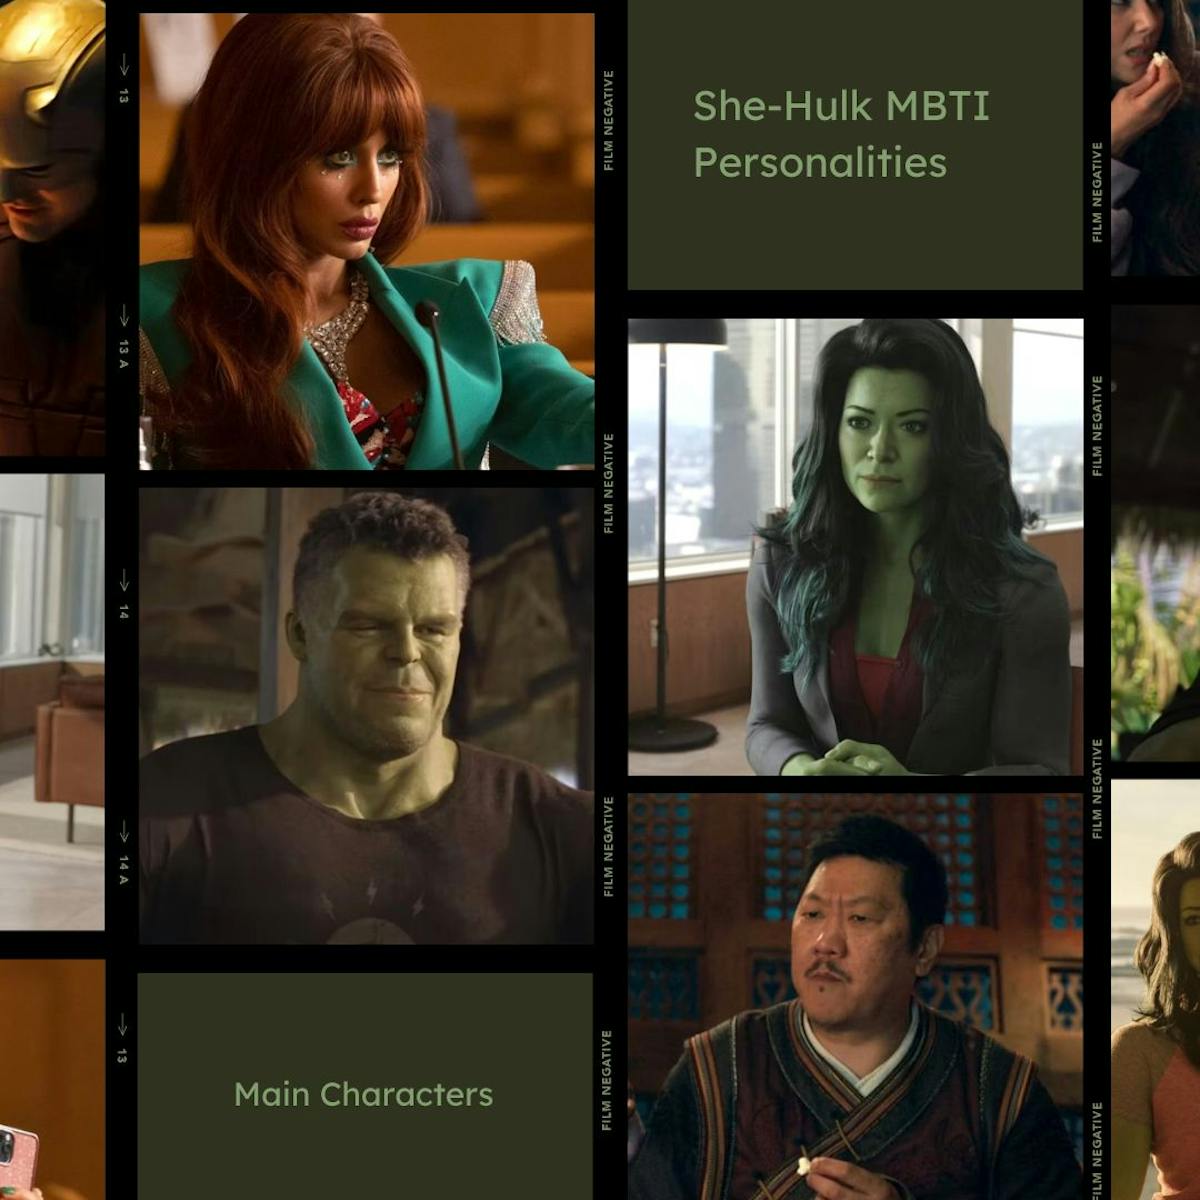 She-Hulk: MBTI Types Of Main Characters